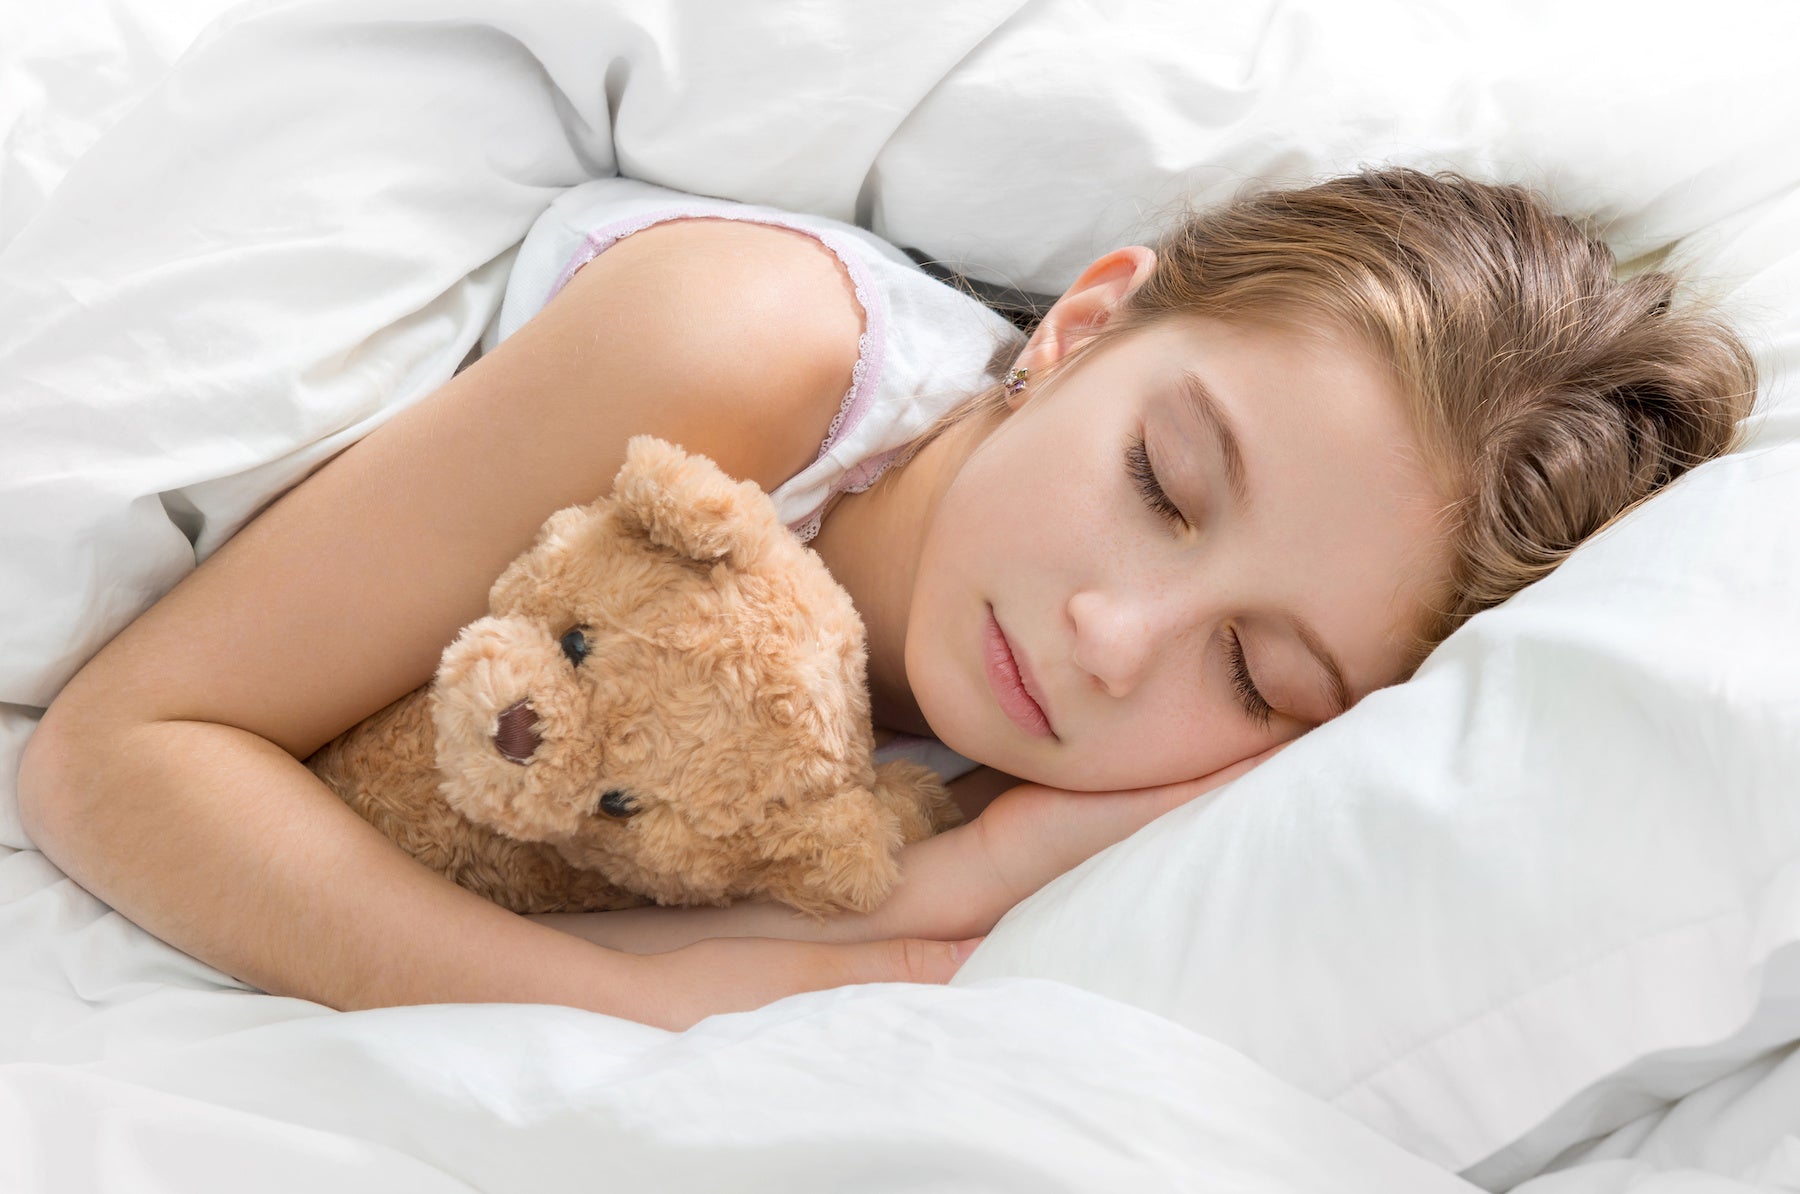 Activities to Promote Better Sleep